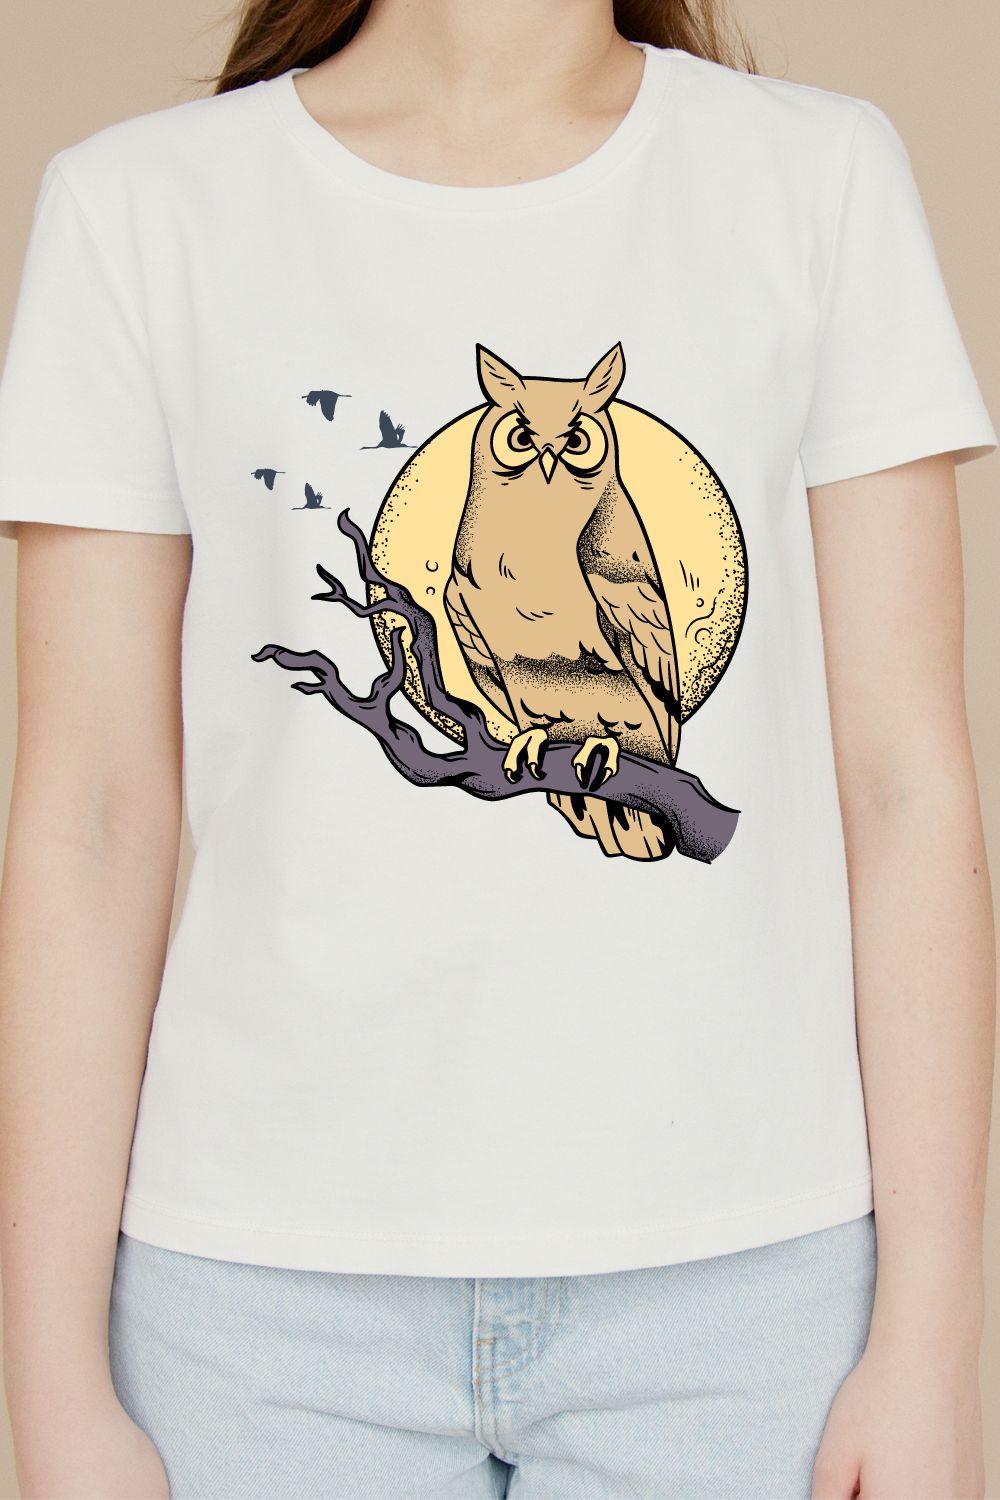 Owl t shirt design pinterest preview image.